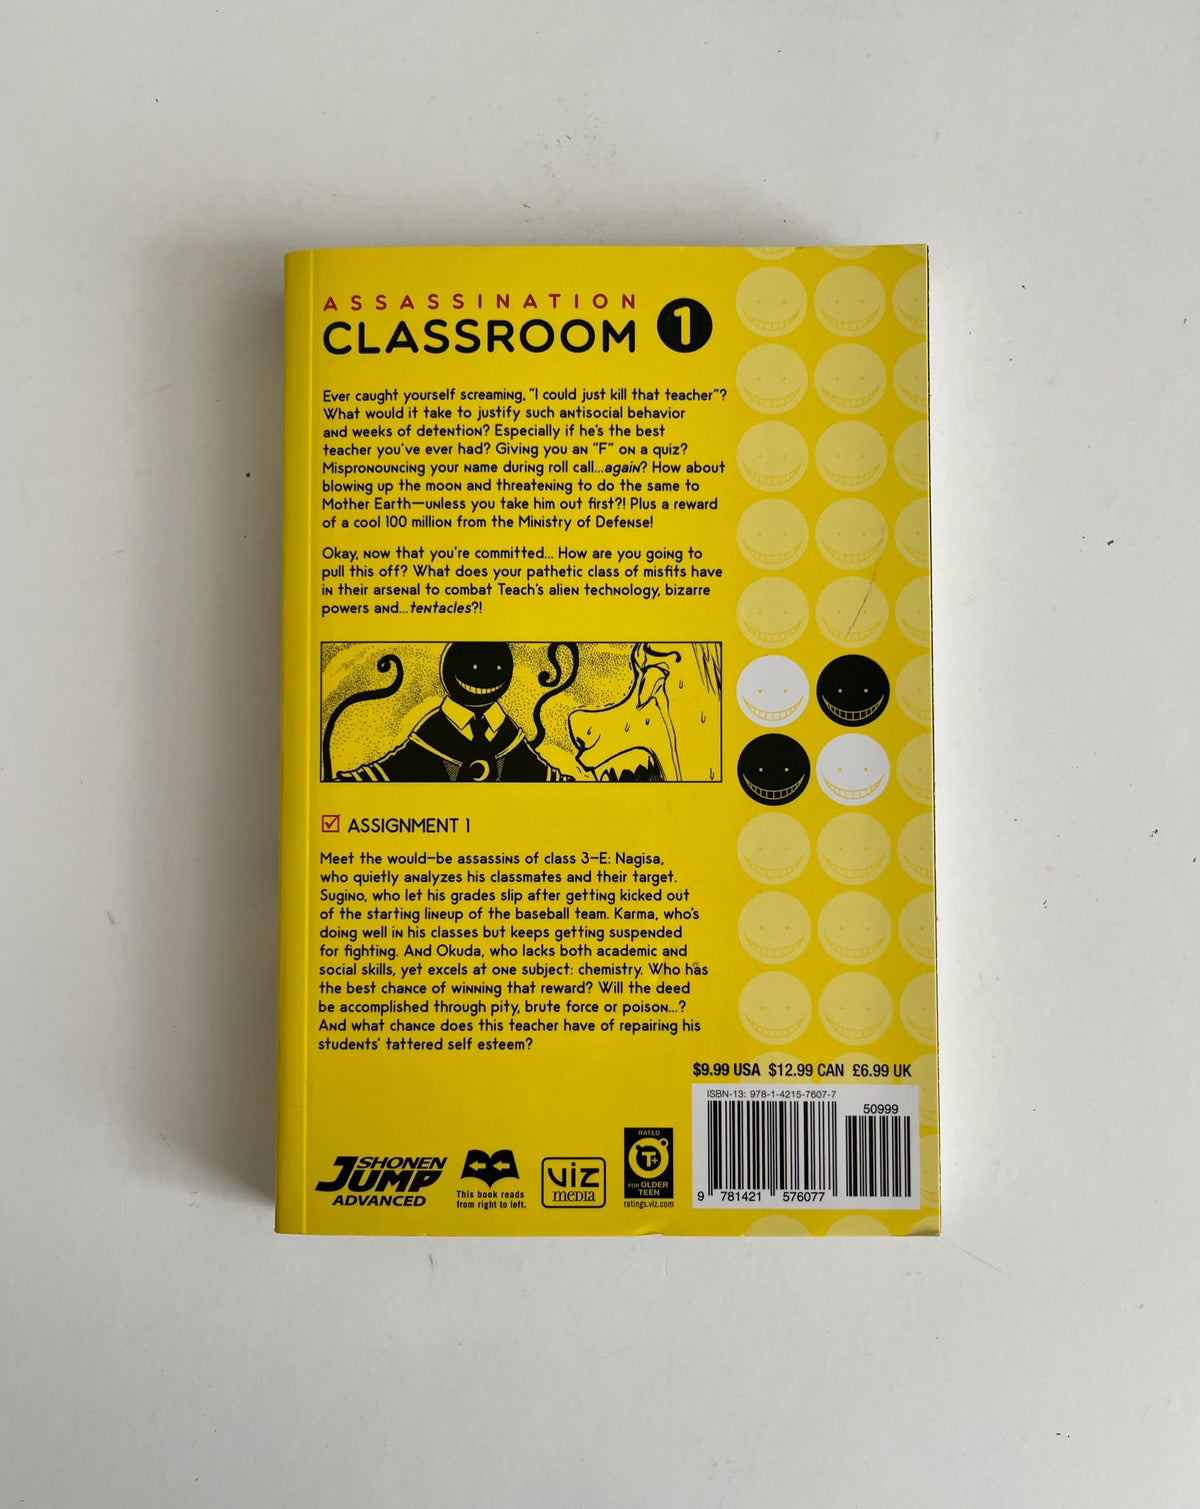 Assassination Classroom by Yusei Matsui